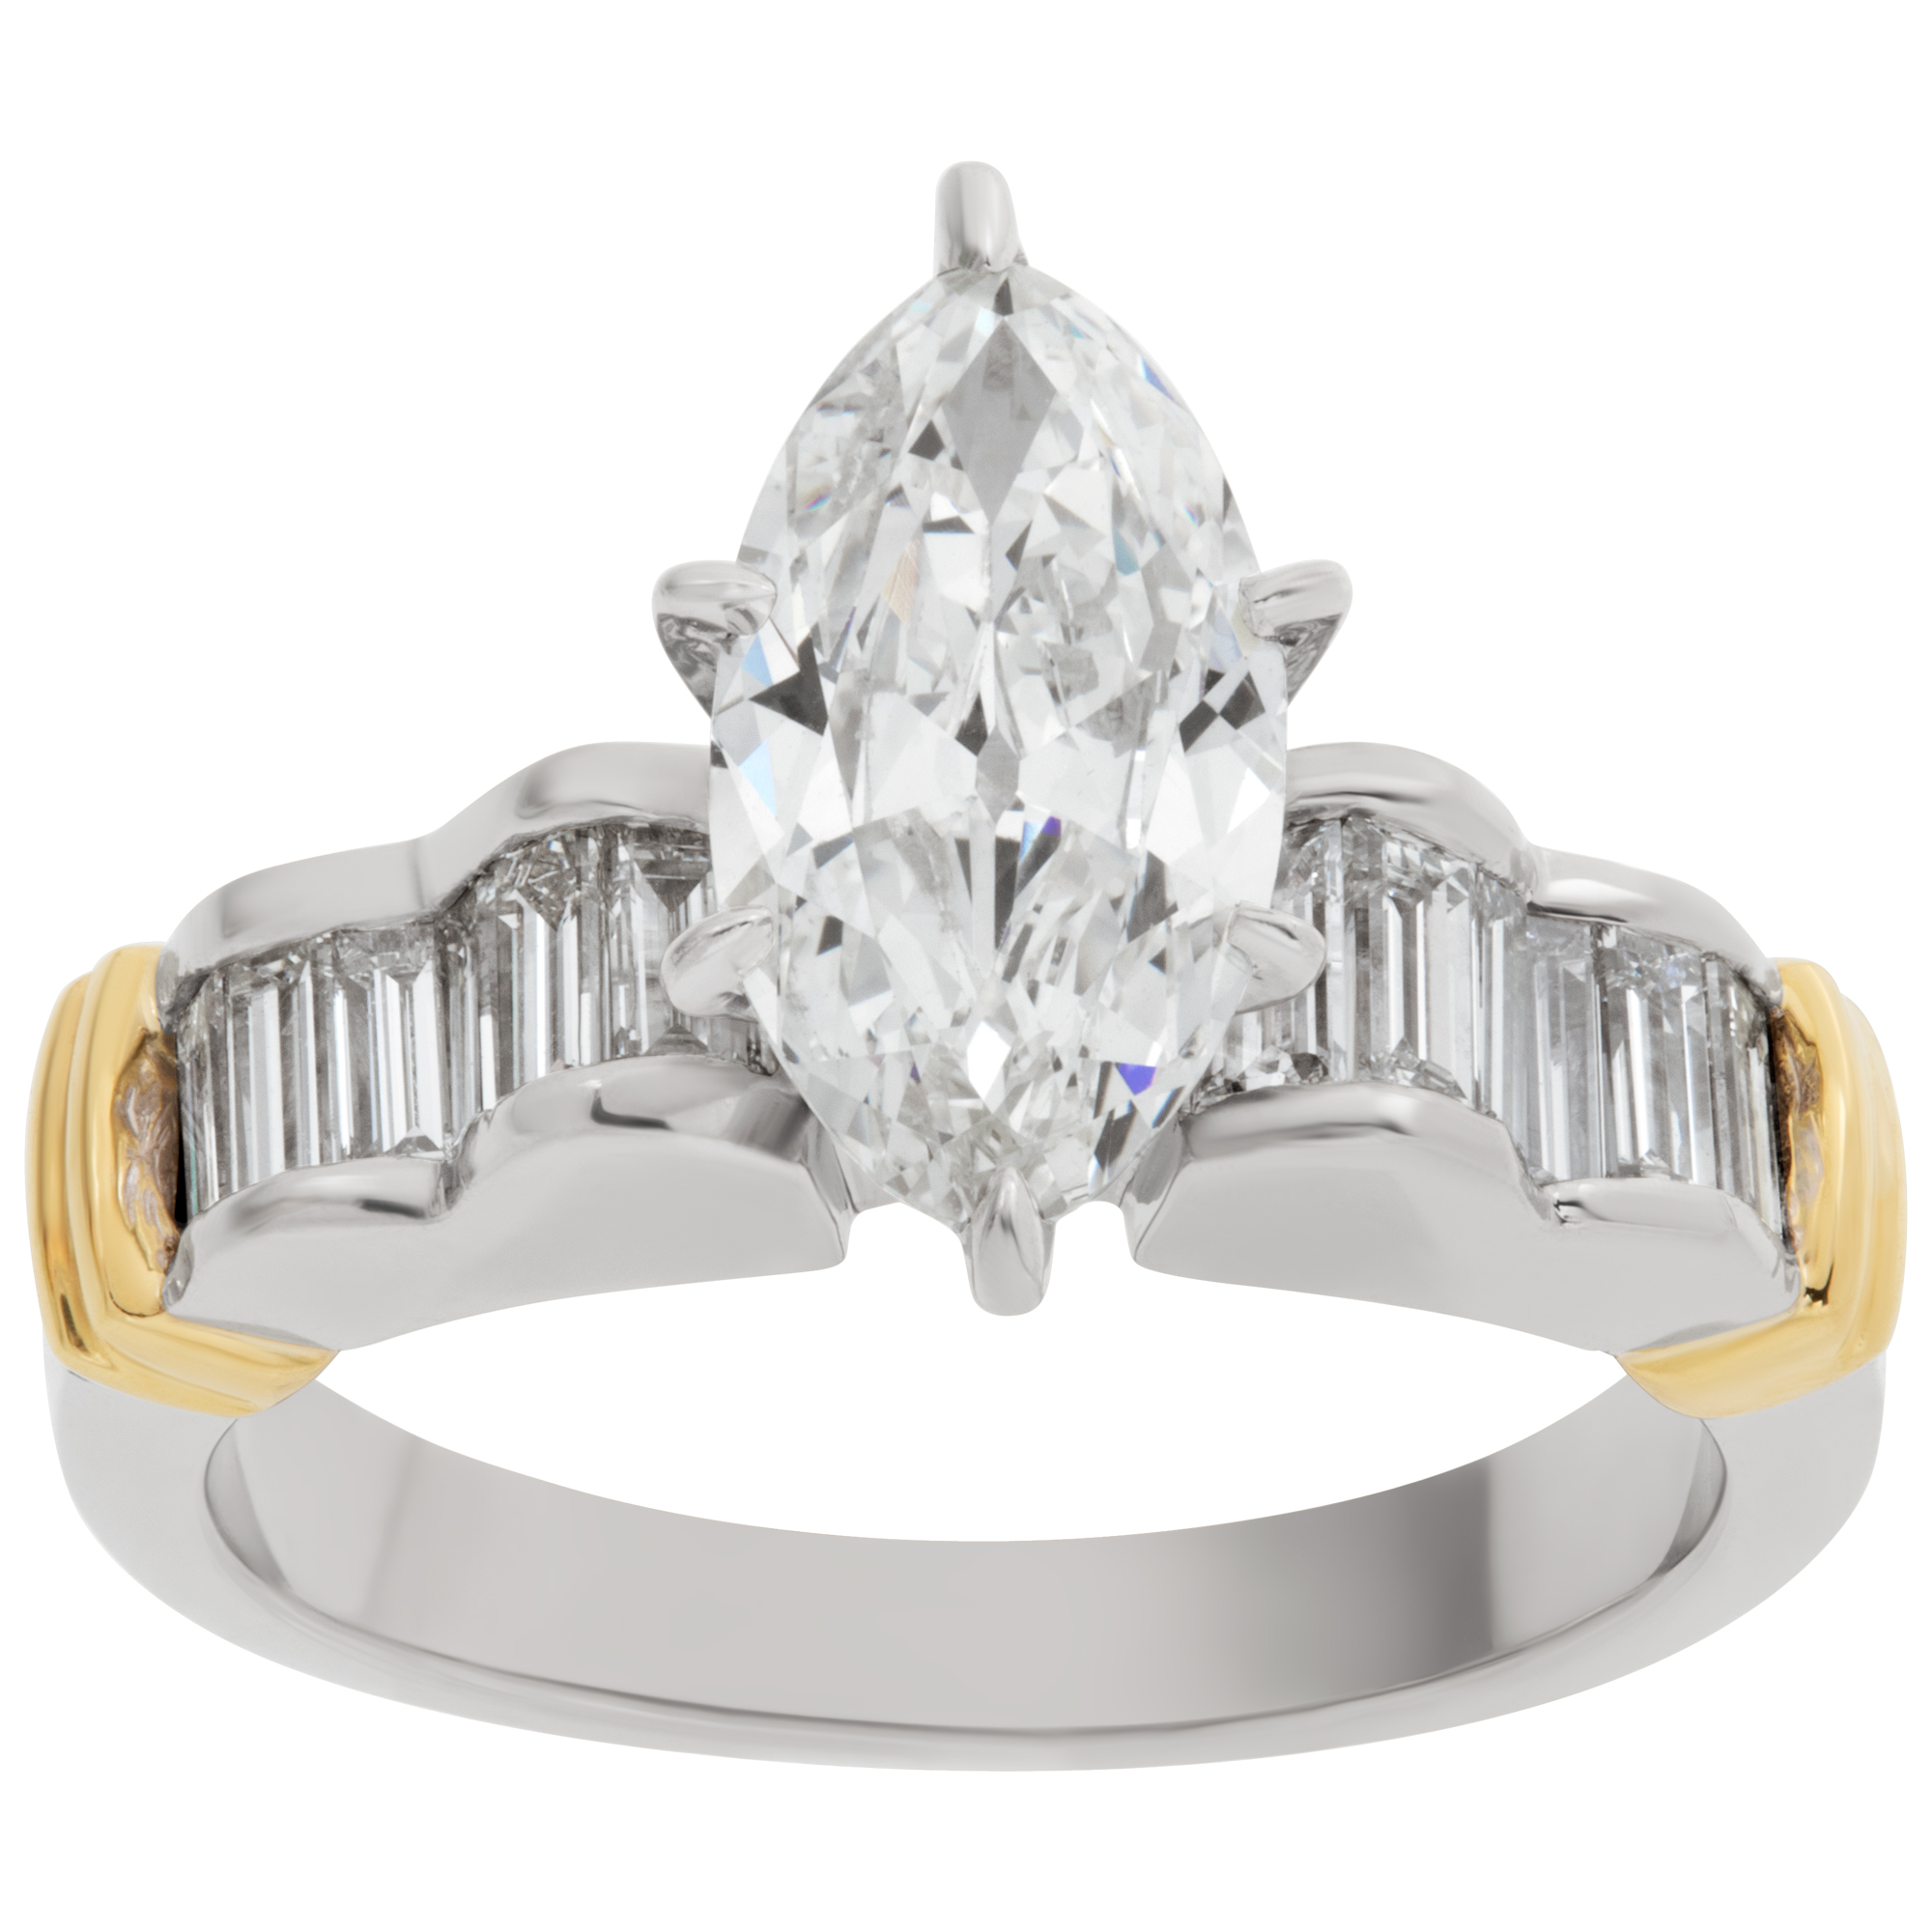 GIA oval brilliant cut diamond 1.93 carat (I color, VS2 clarity)